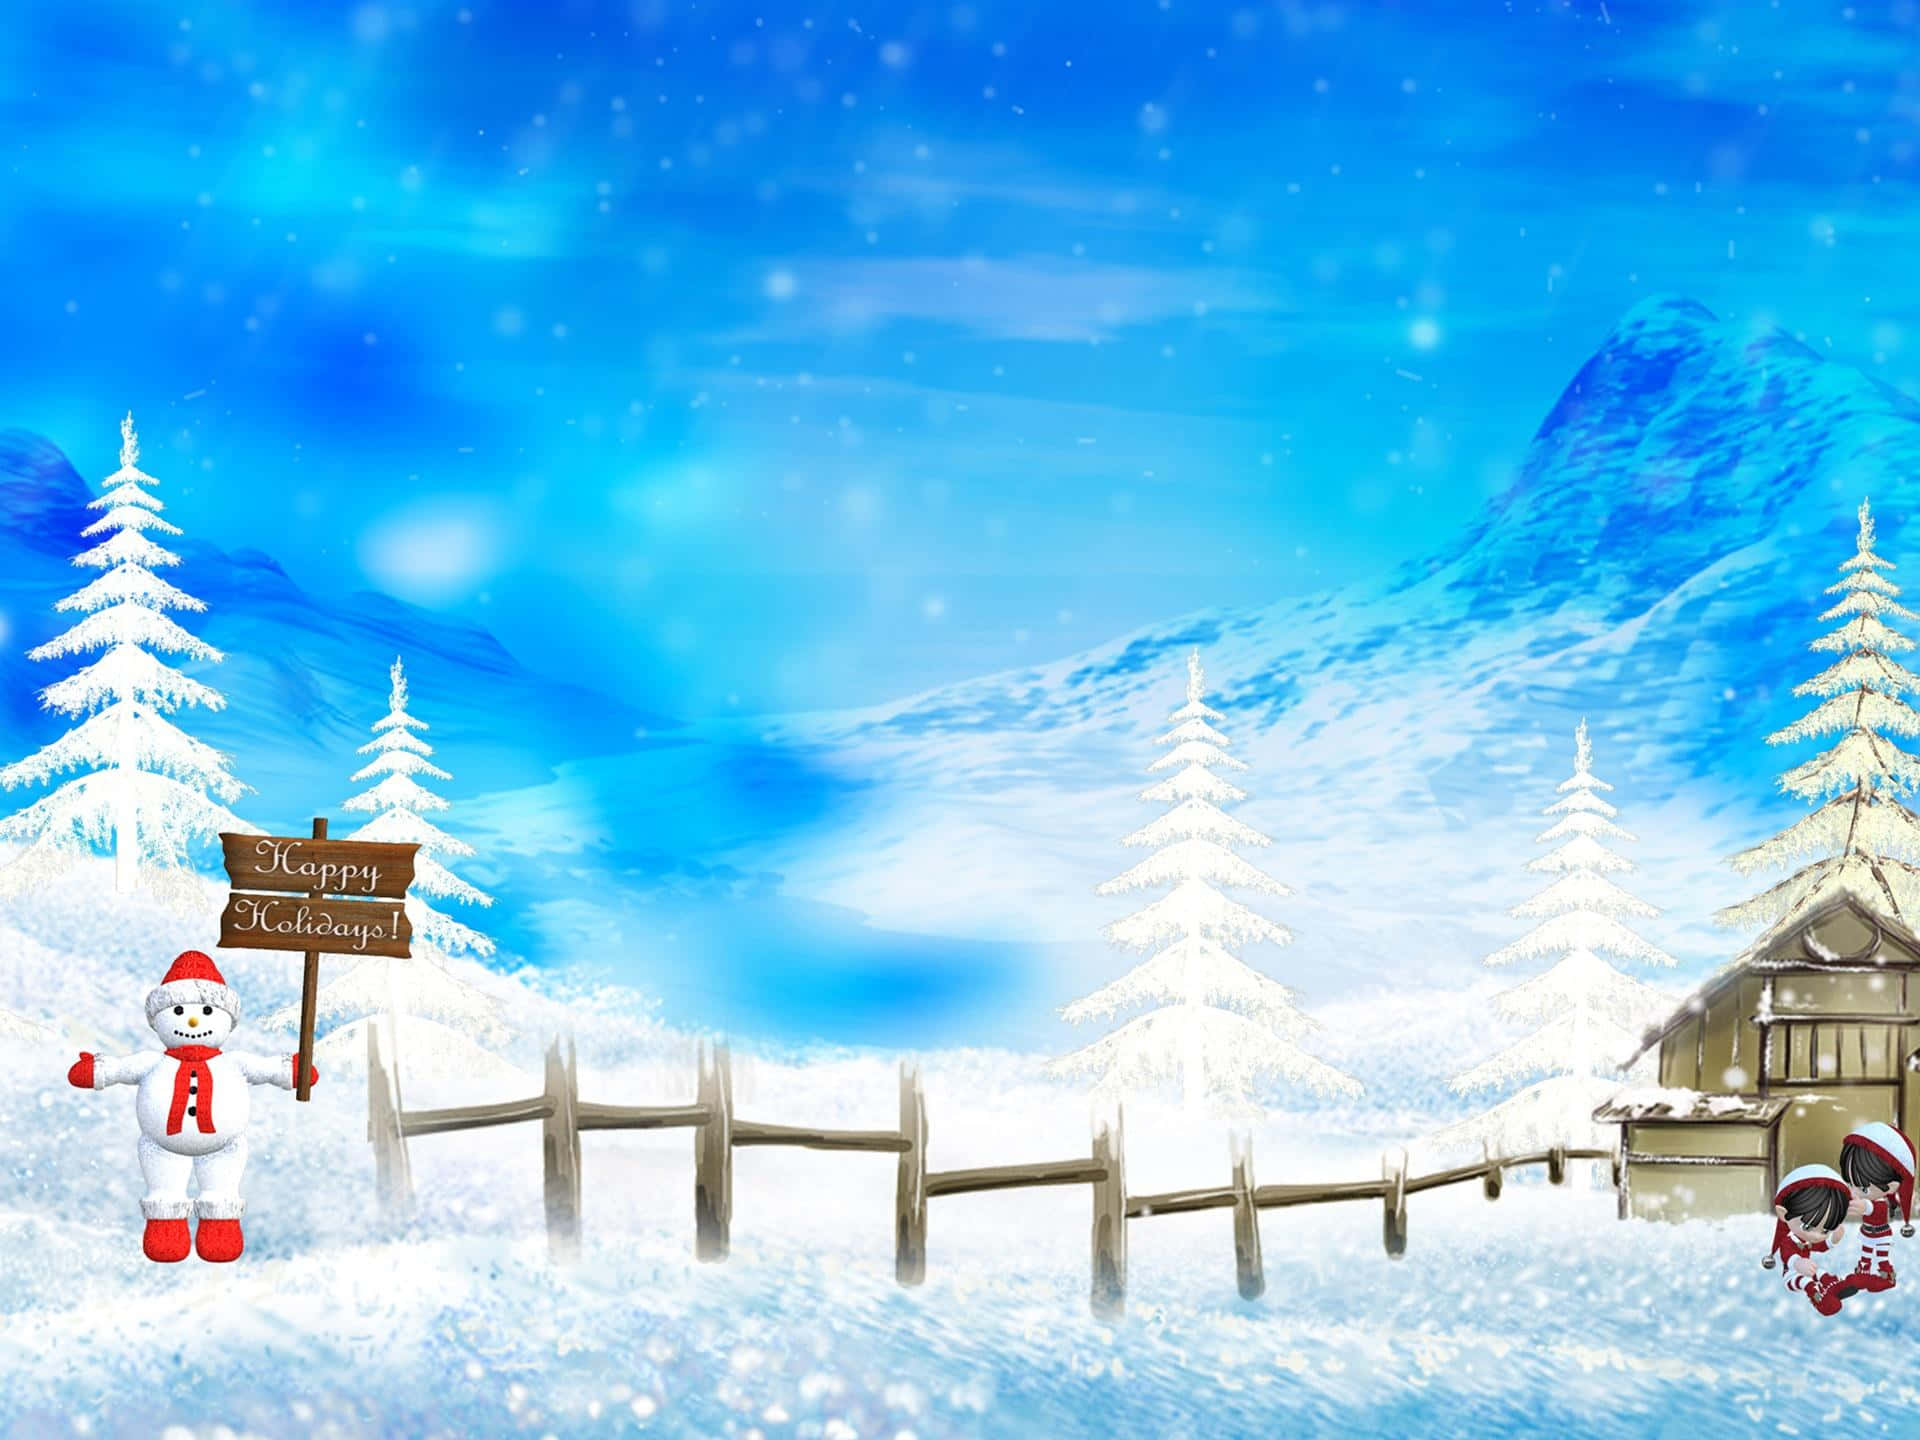 A stunning winter wonderland at Christmas